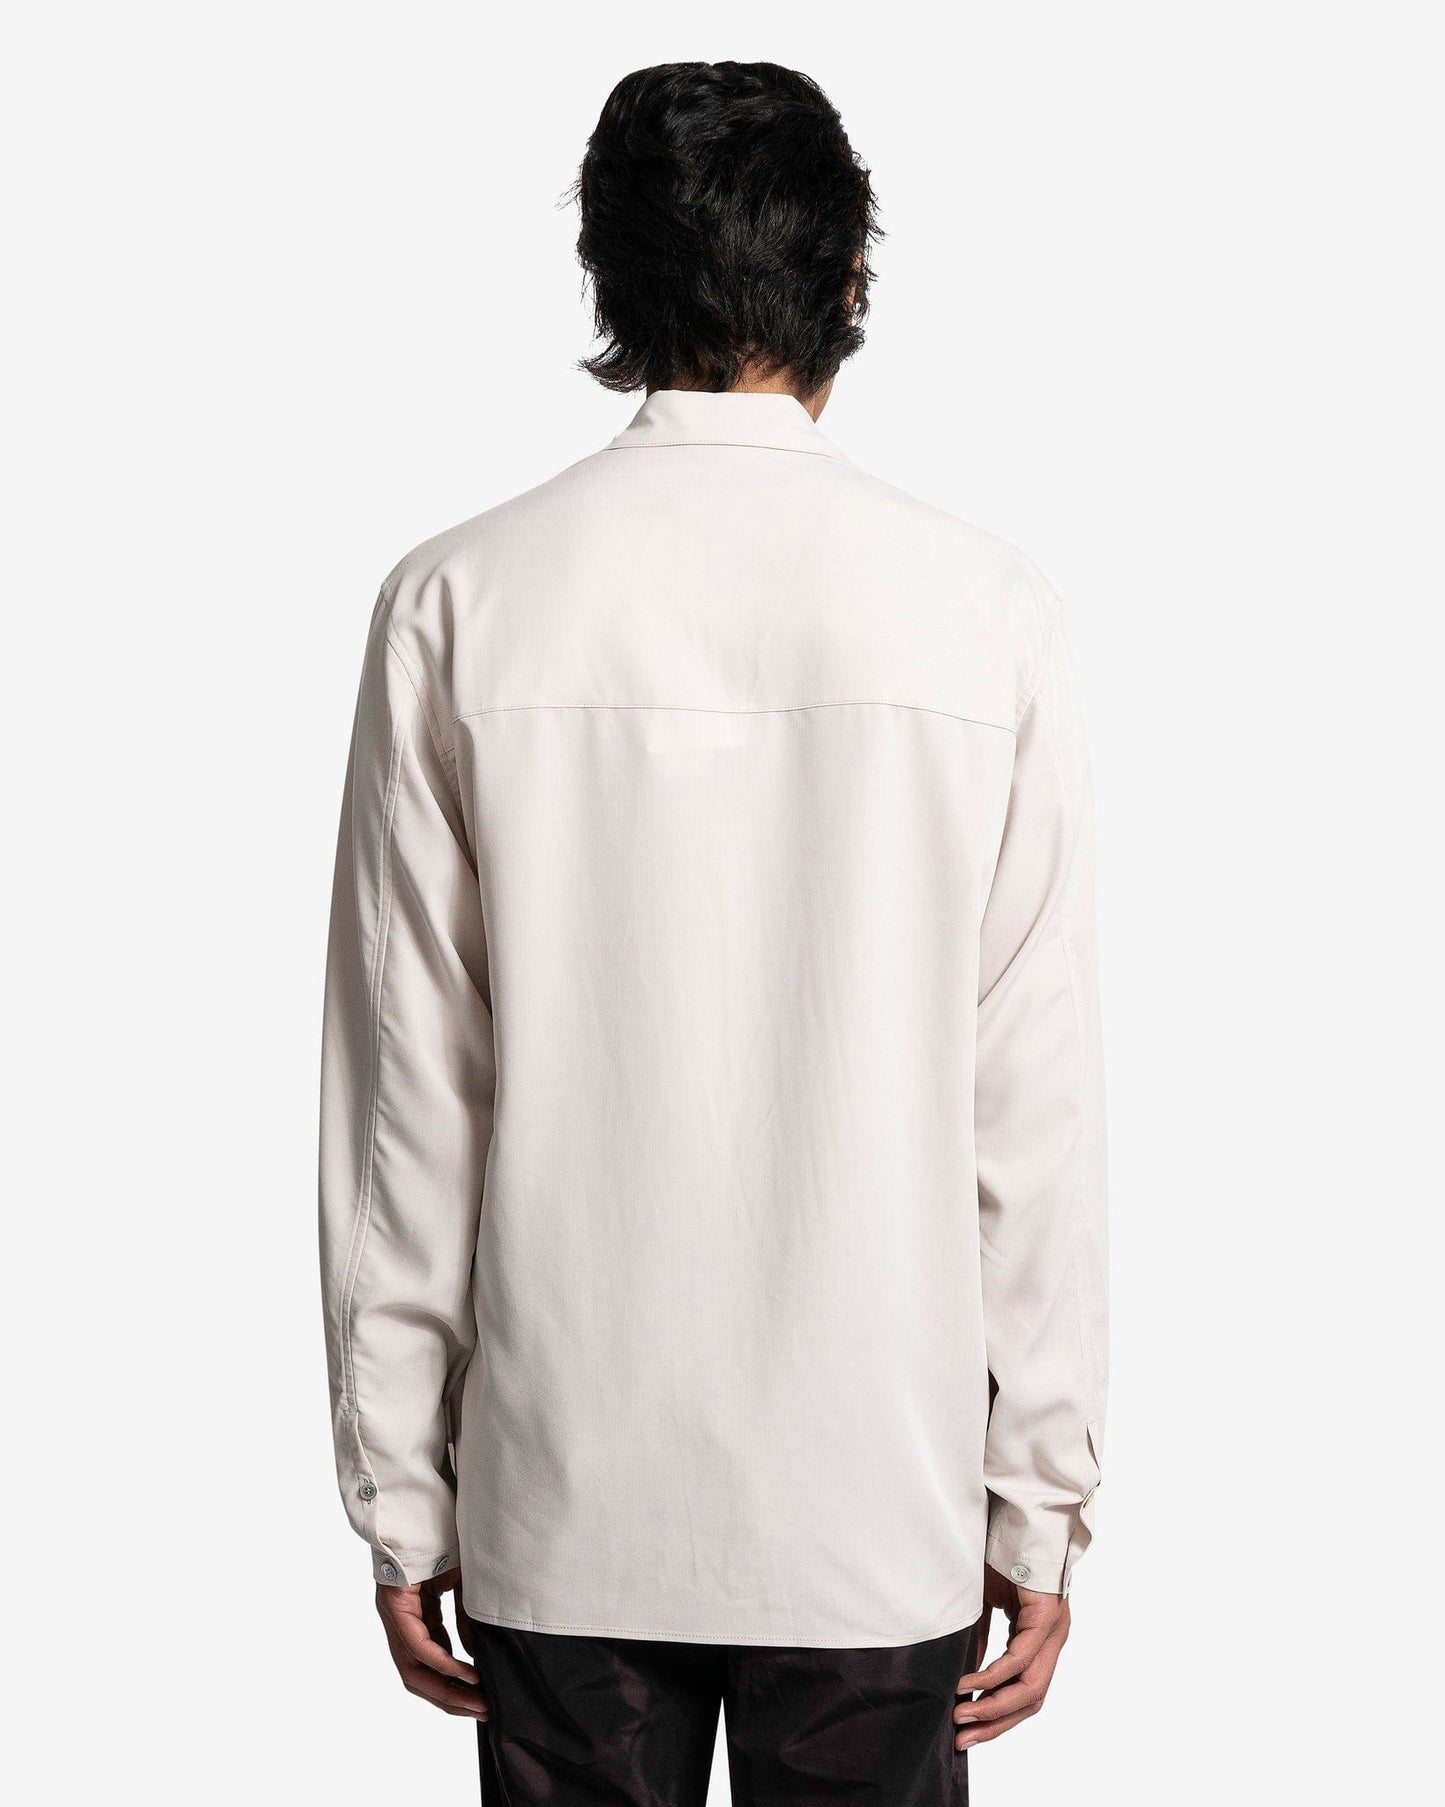 JiyongKim Men's Shirts Layered Shirt in Off-White